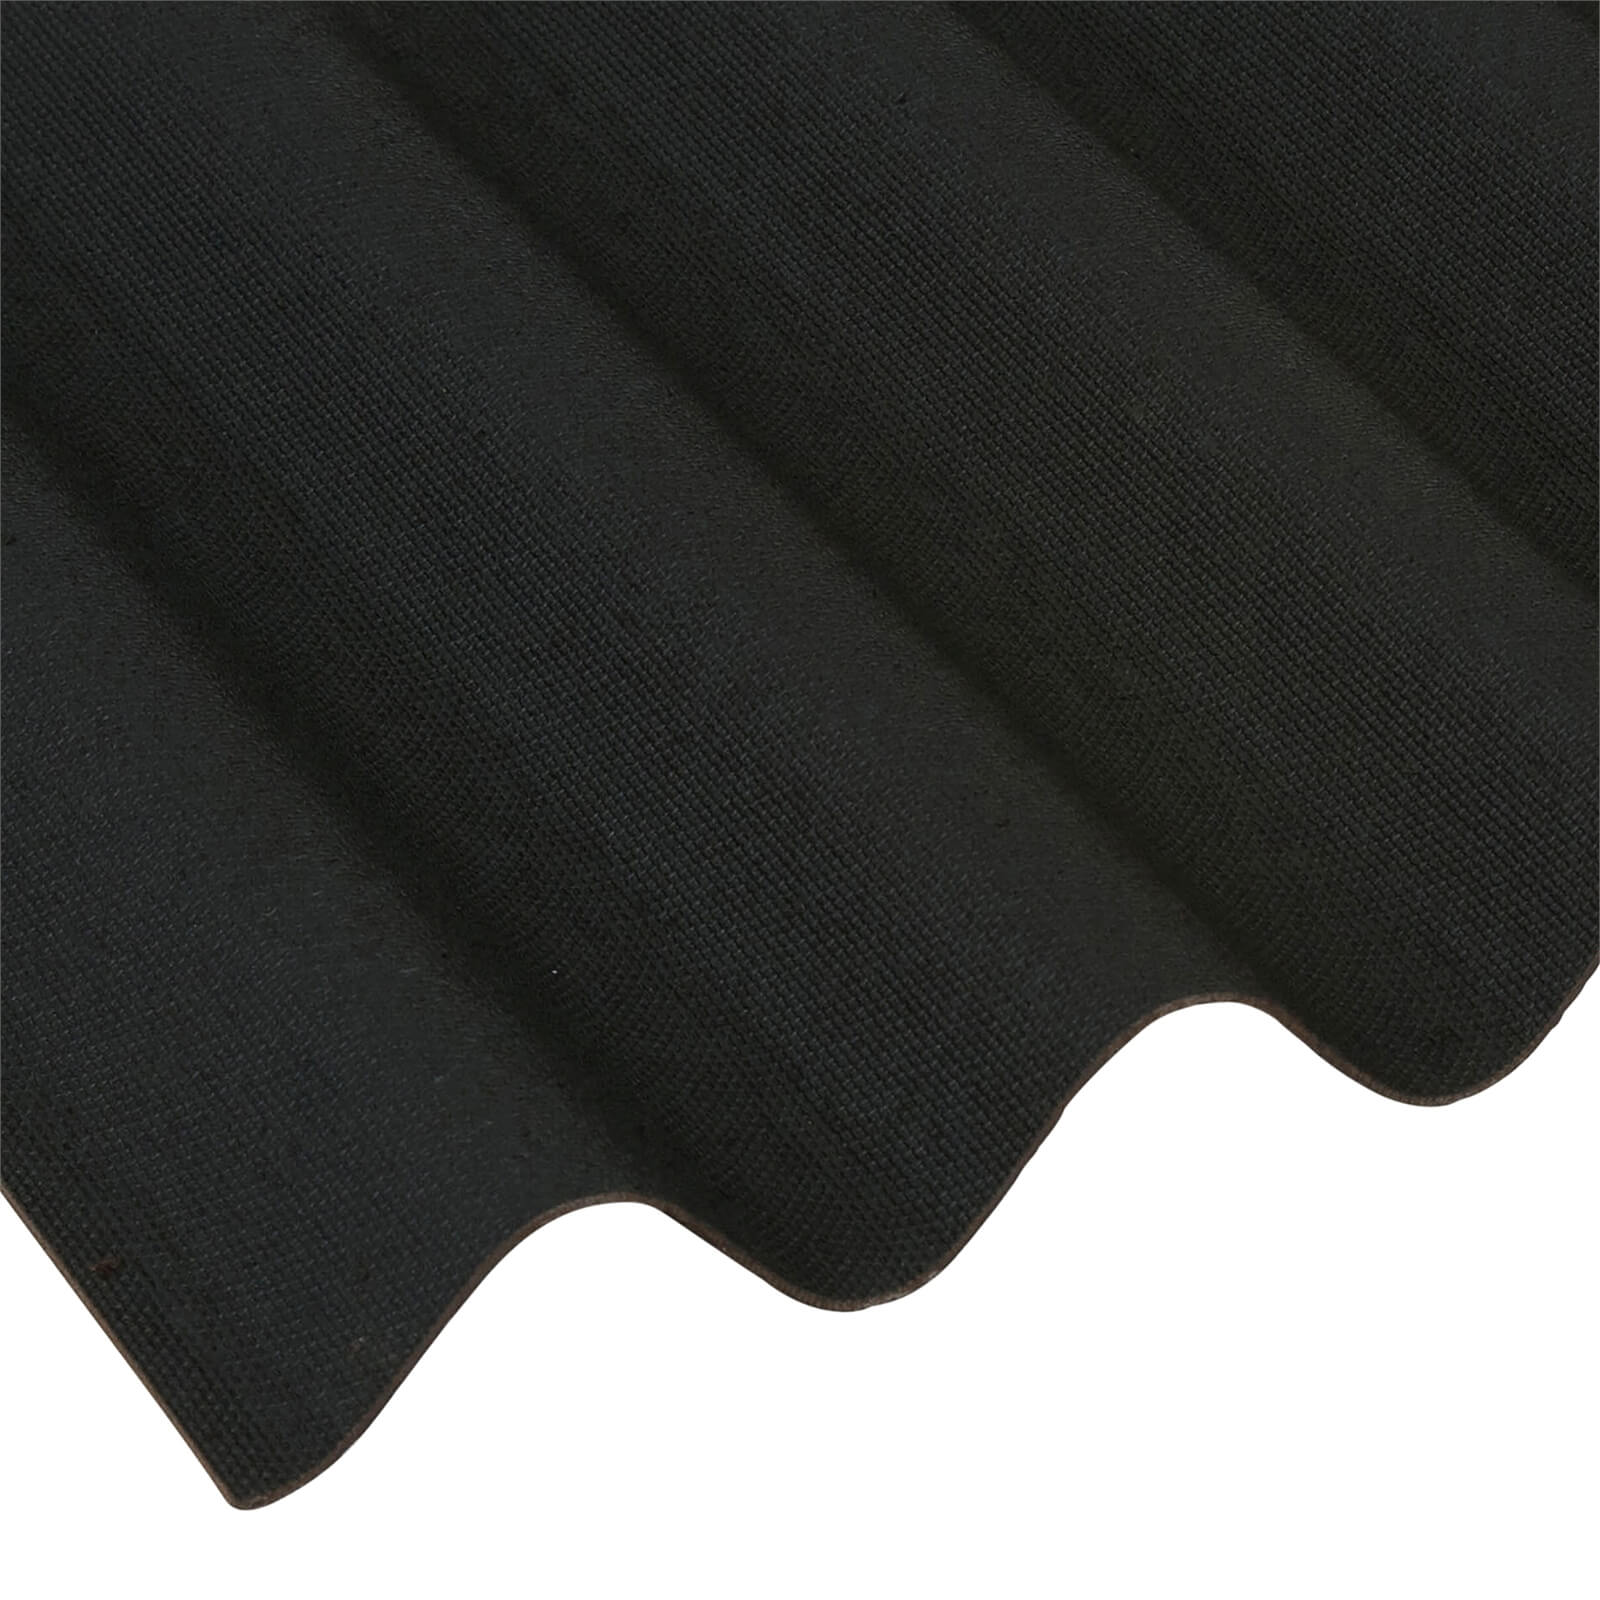 Coroline Black Roof Sheet 2m - 3 Pack